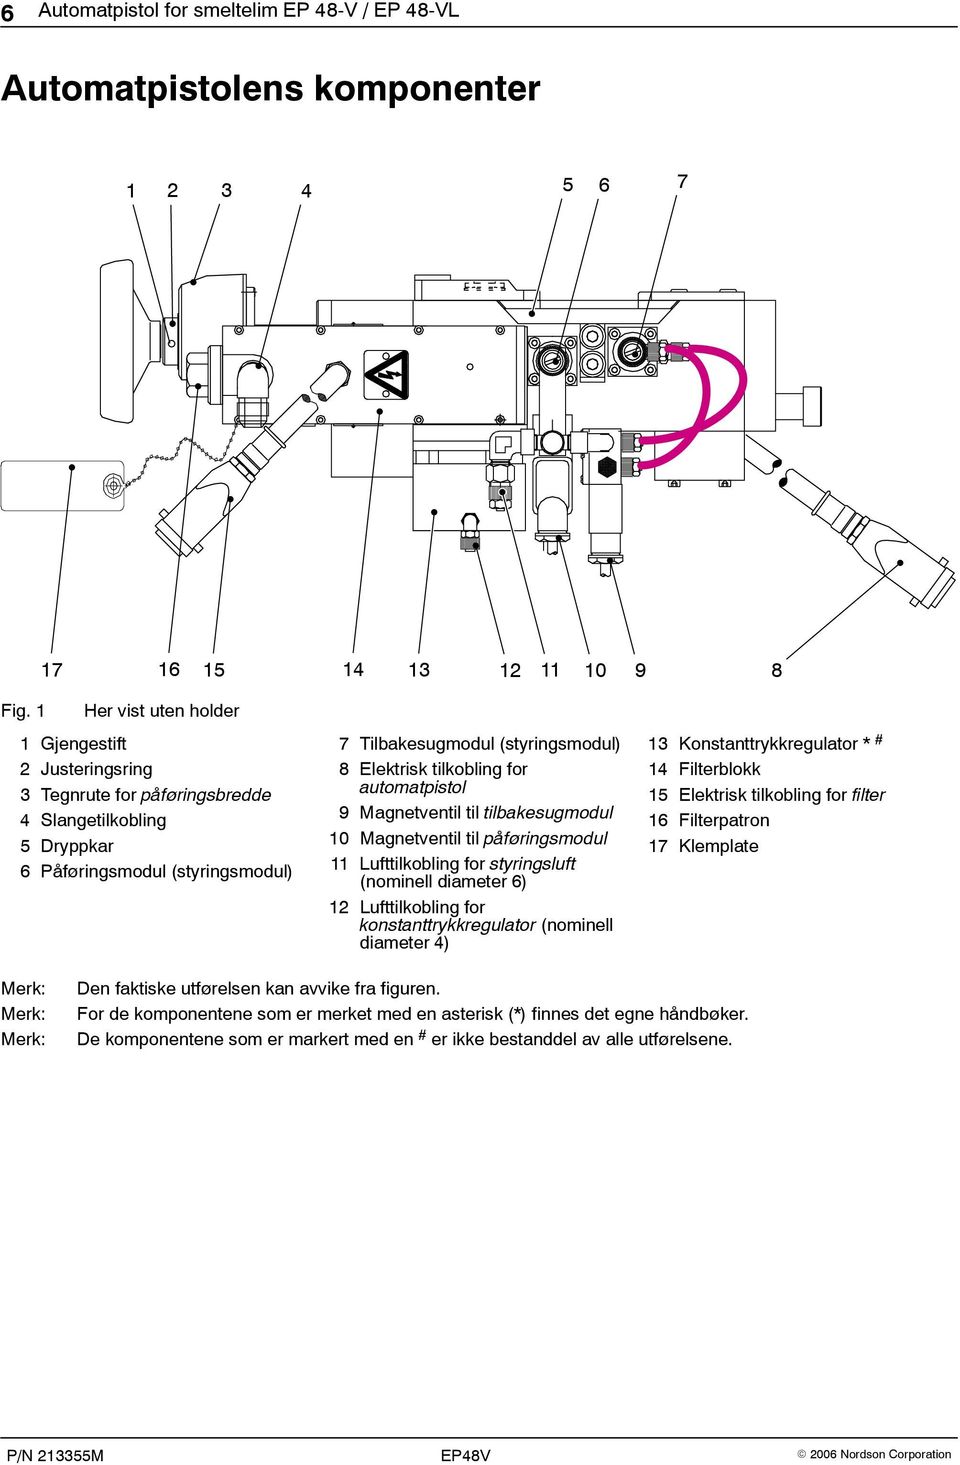 tilkobling for automatpistol 9 Magnetventil til tilbakesugmodul 10 Magnetventil til påføringsmodul 11 Lufttilkobling for styringsluft (nominell diameter 6) 12 Lufttilkobling for